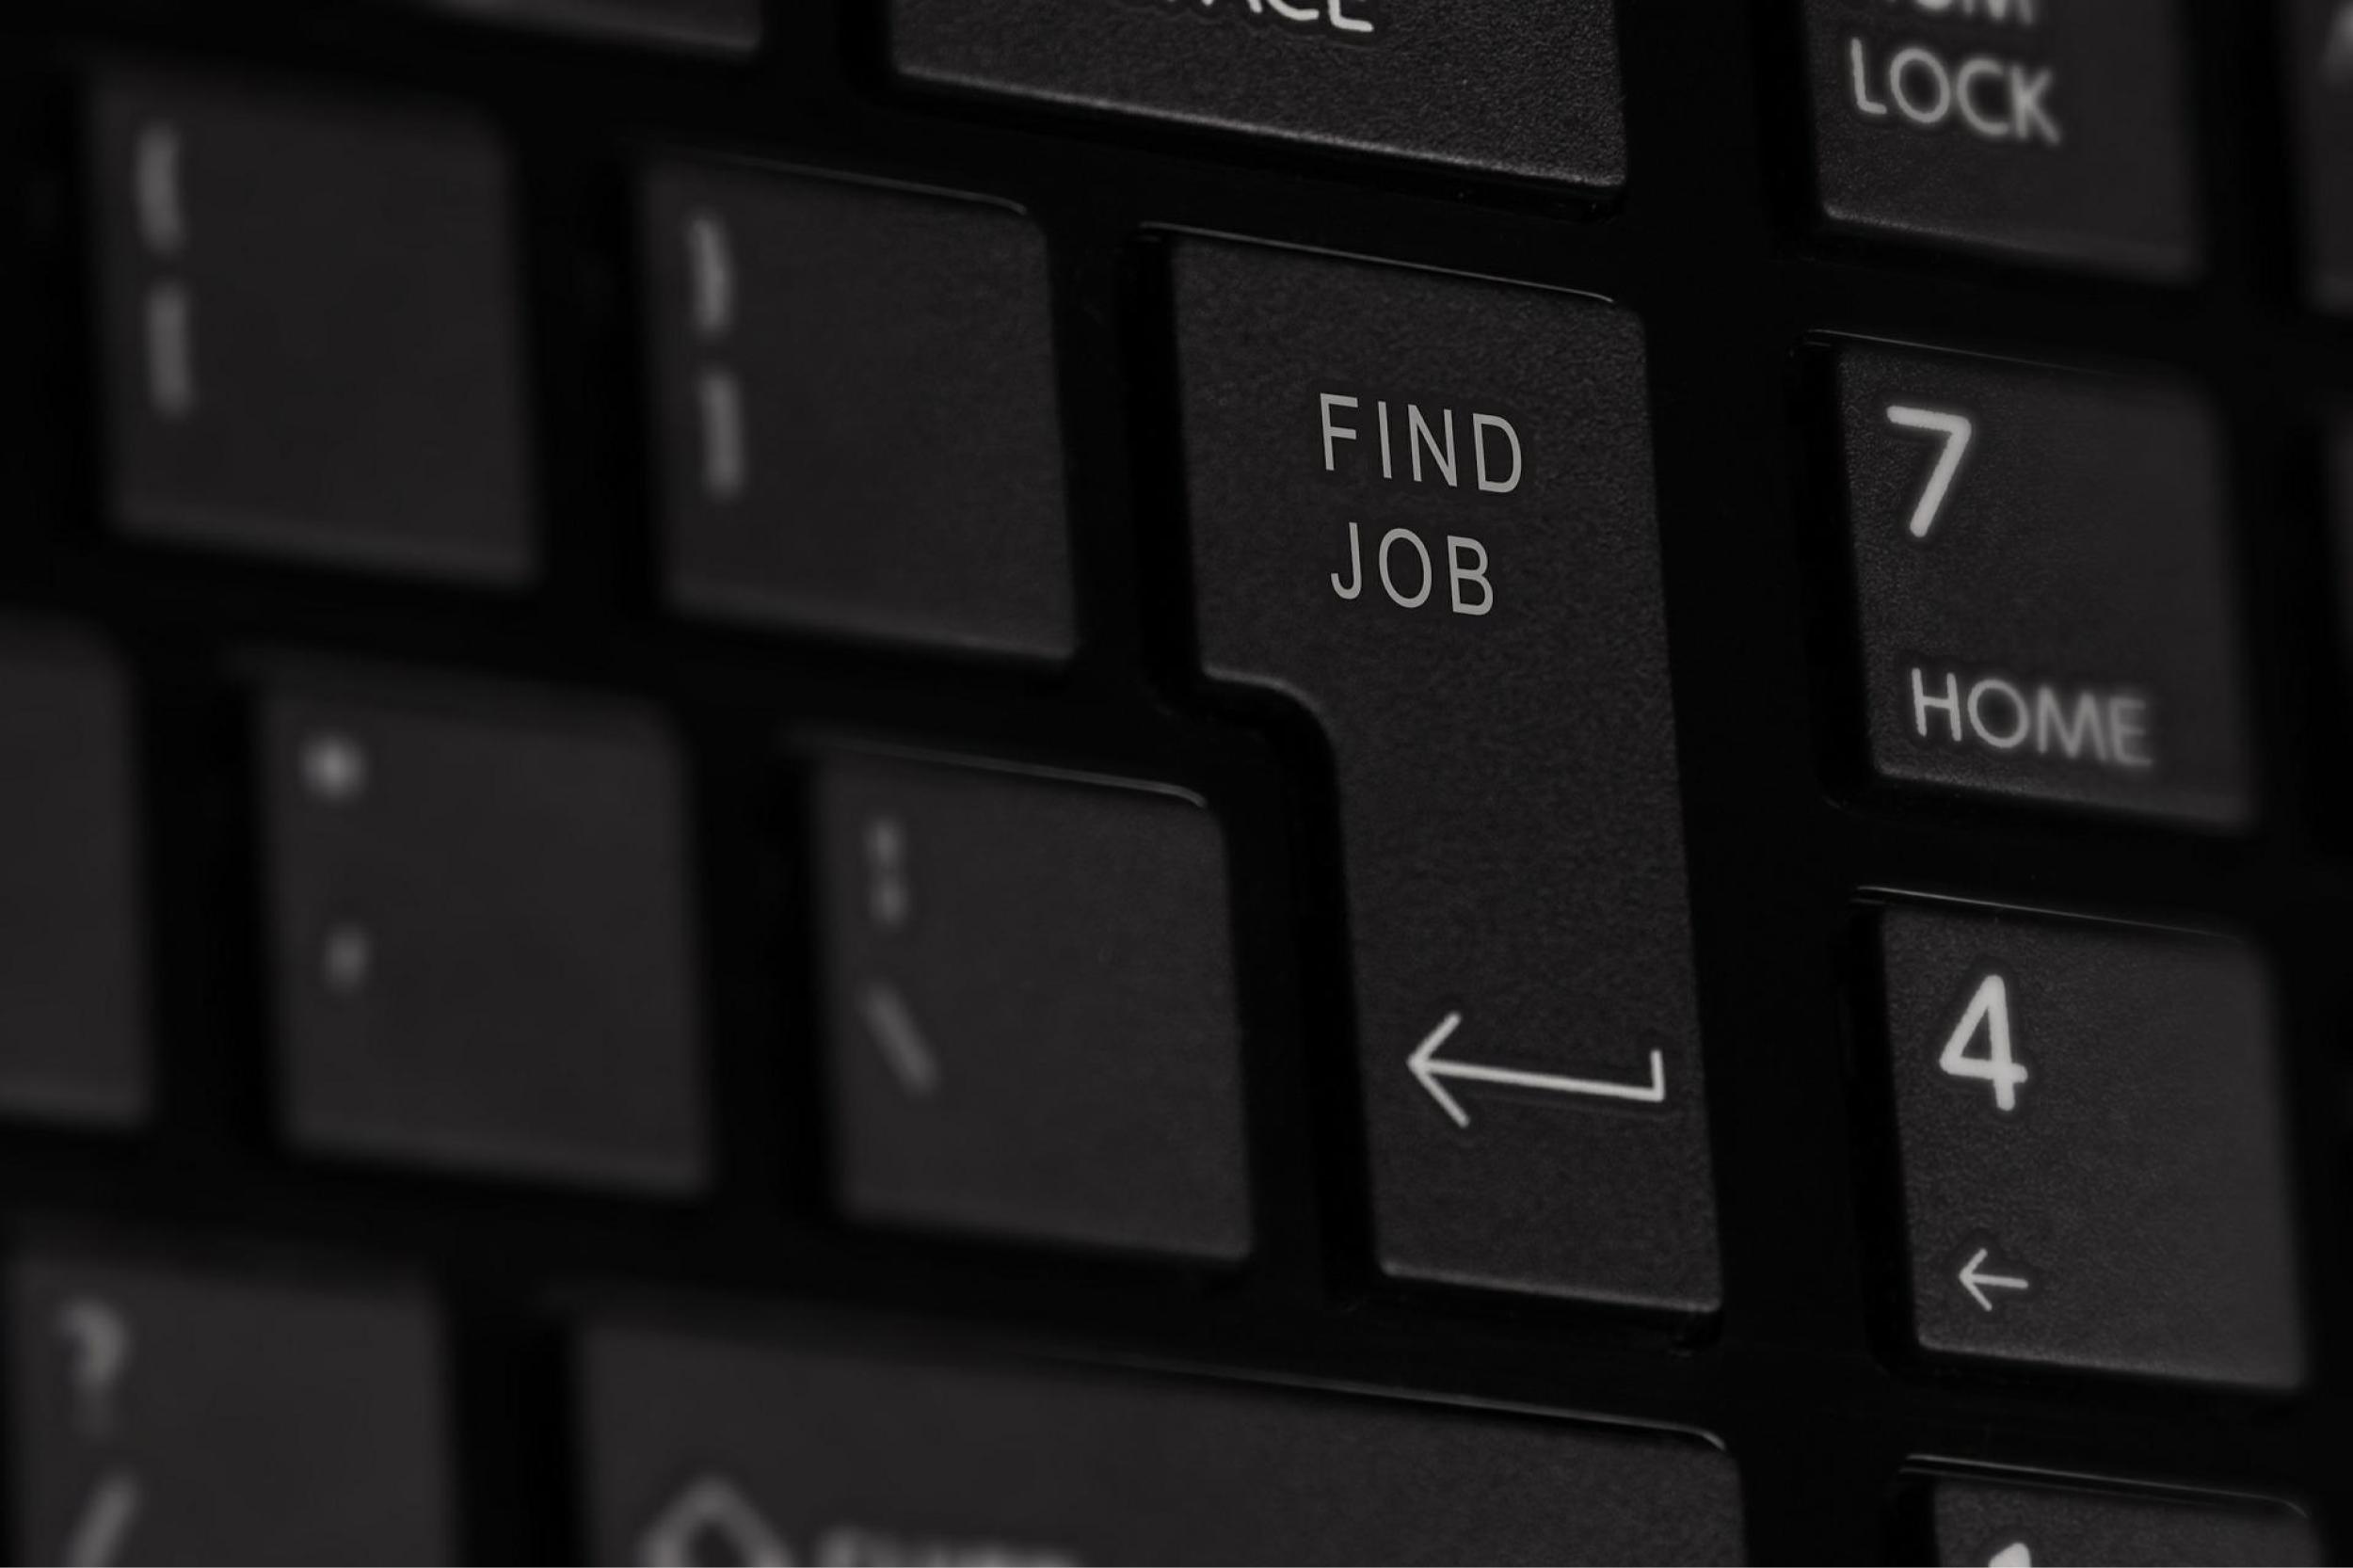 Find job keyboard